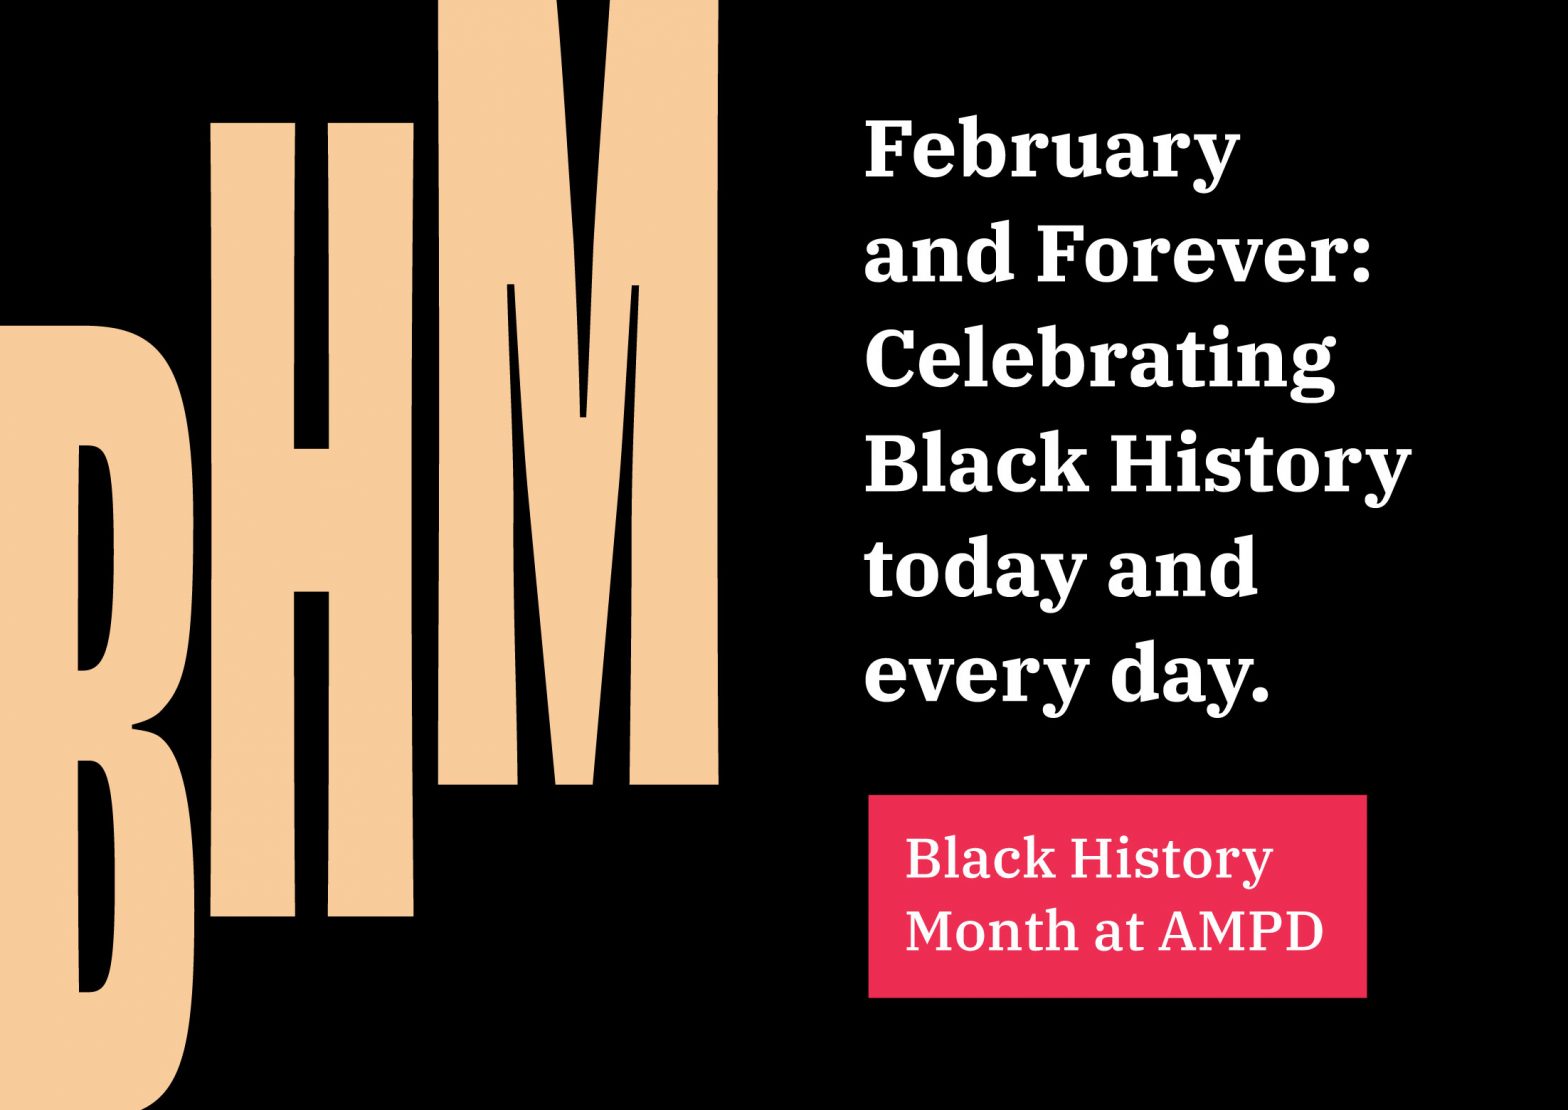 Black History Month at AMPD